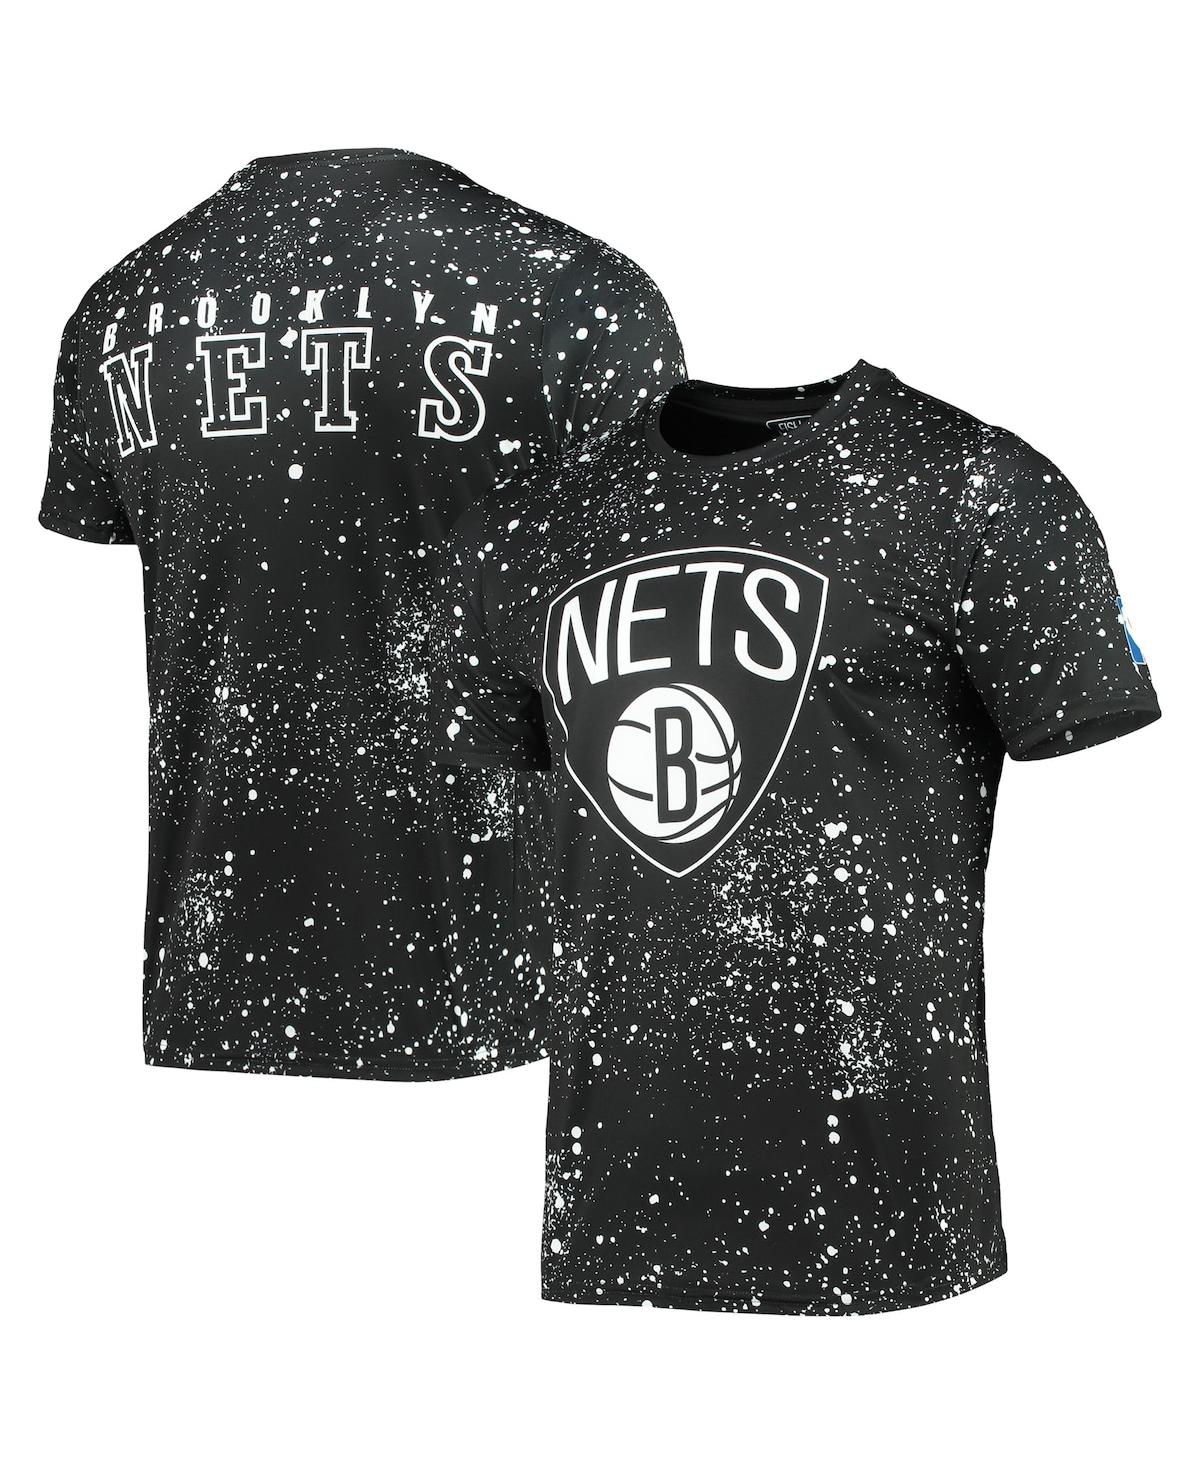 Men's Black Brooklyn Nets Splatter Print T-shirt - Black